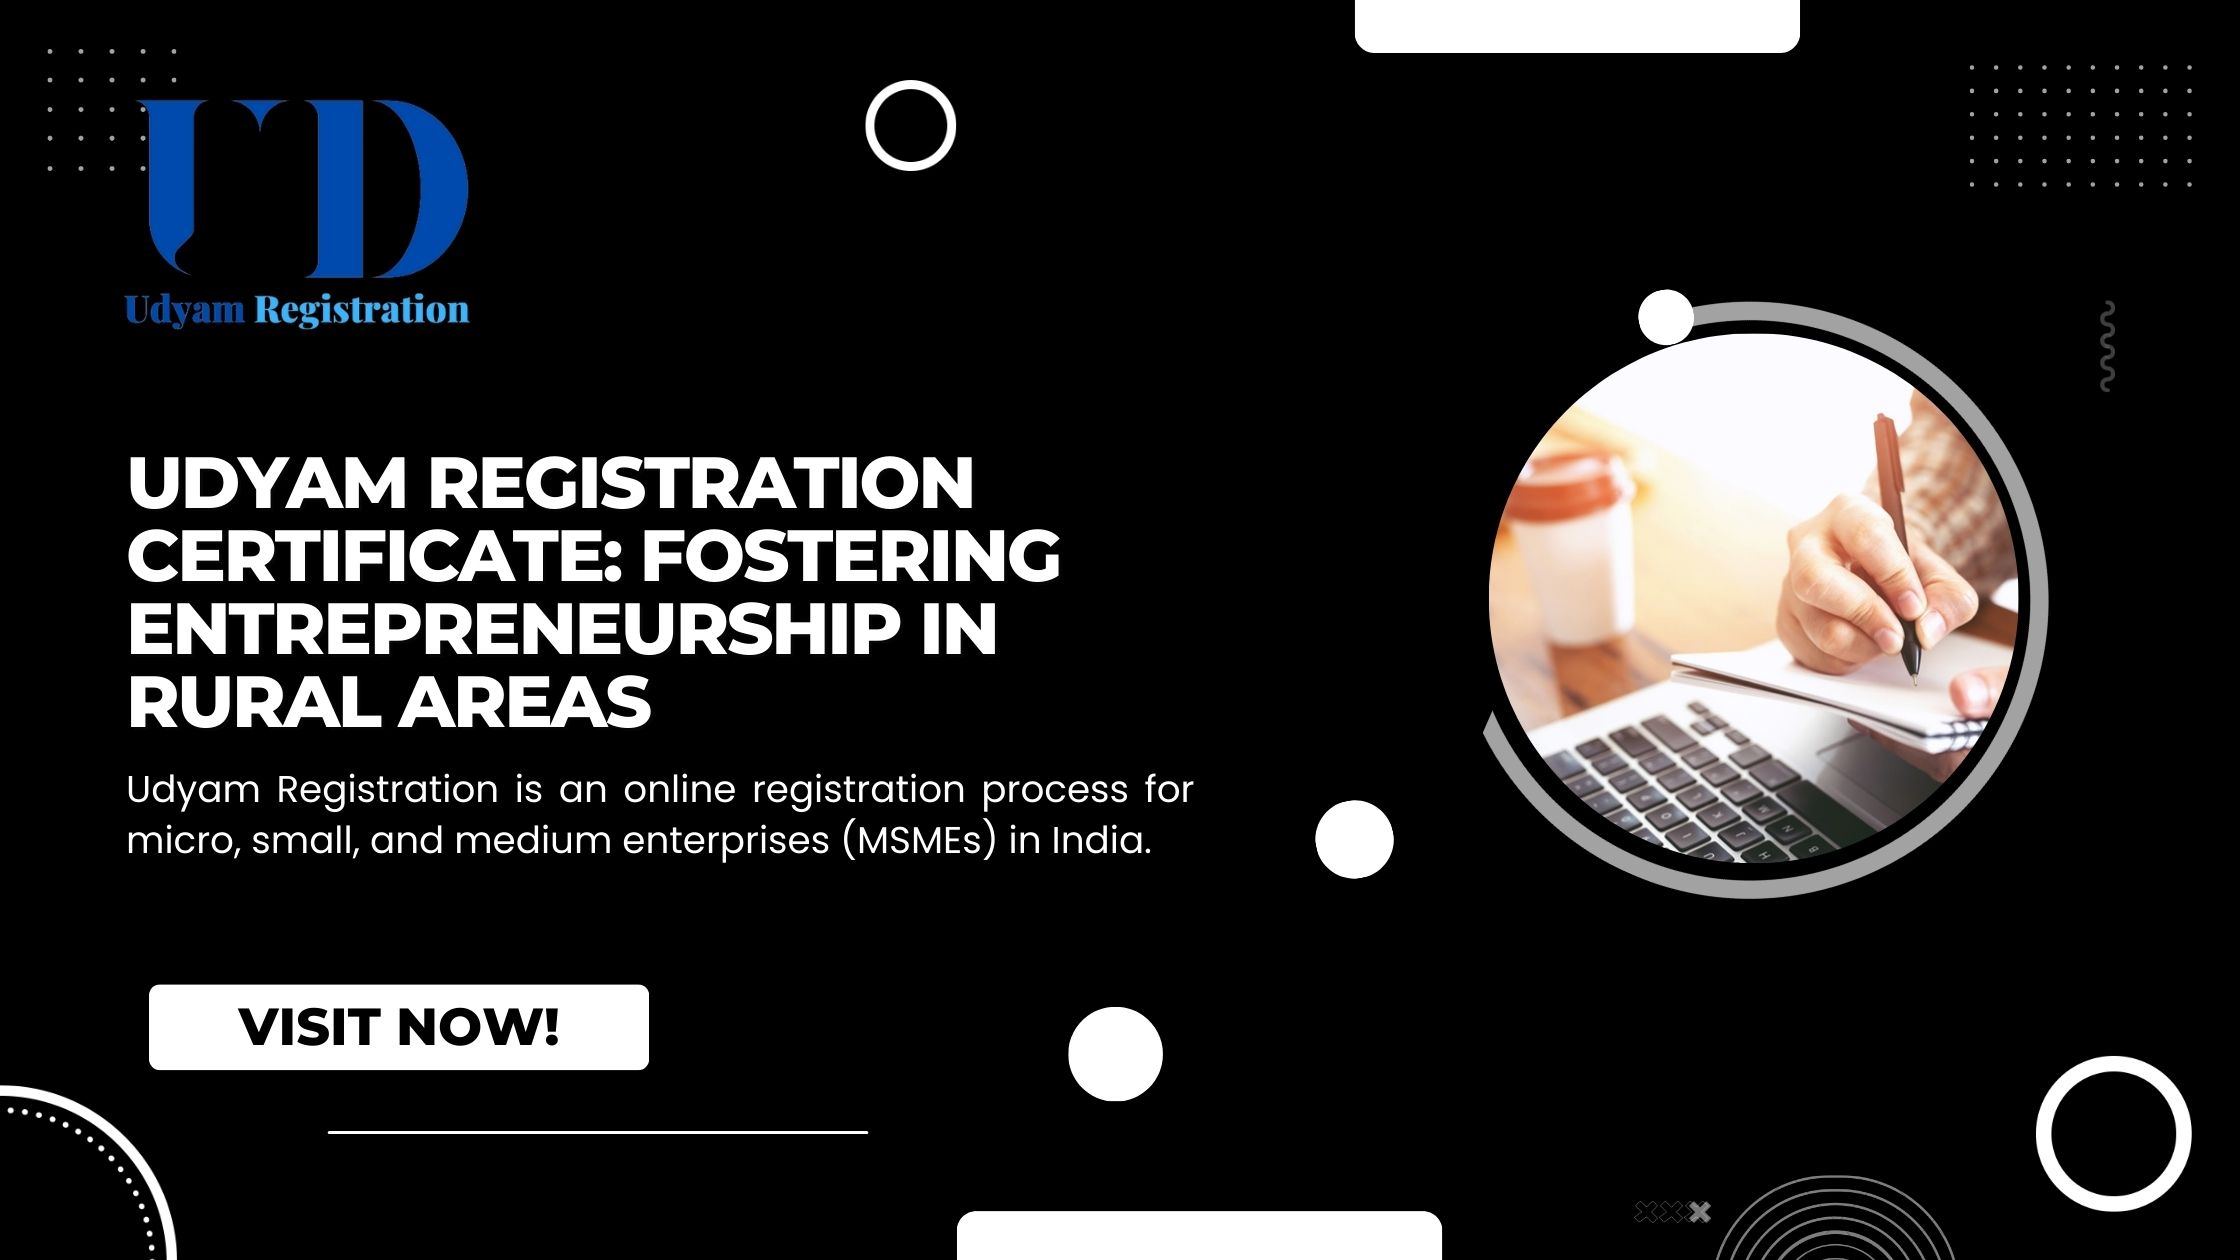 Udyam Registration Certificate: Fostering Entrepreneurship in Rural Areas